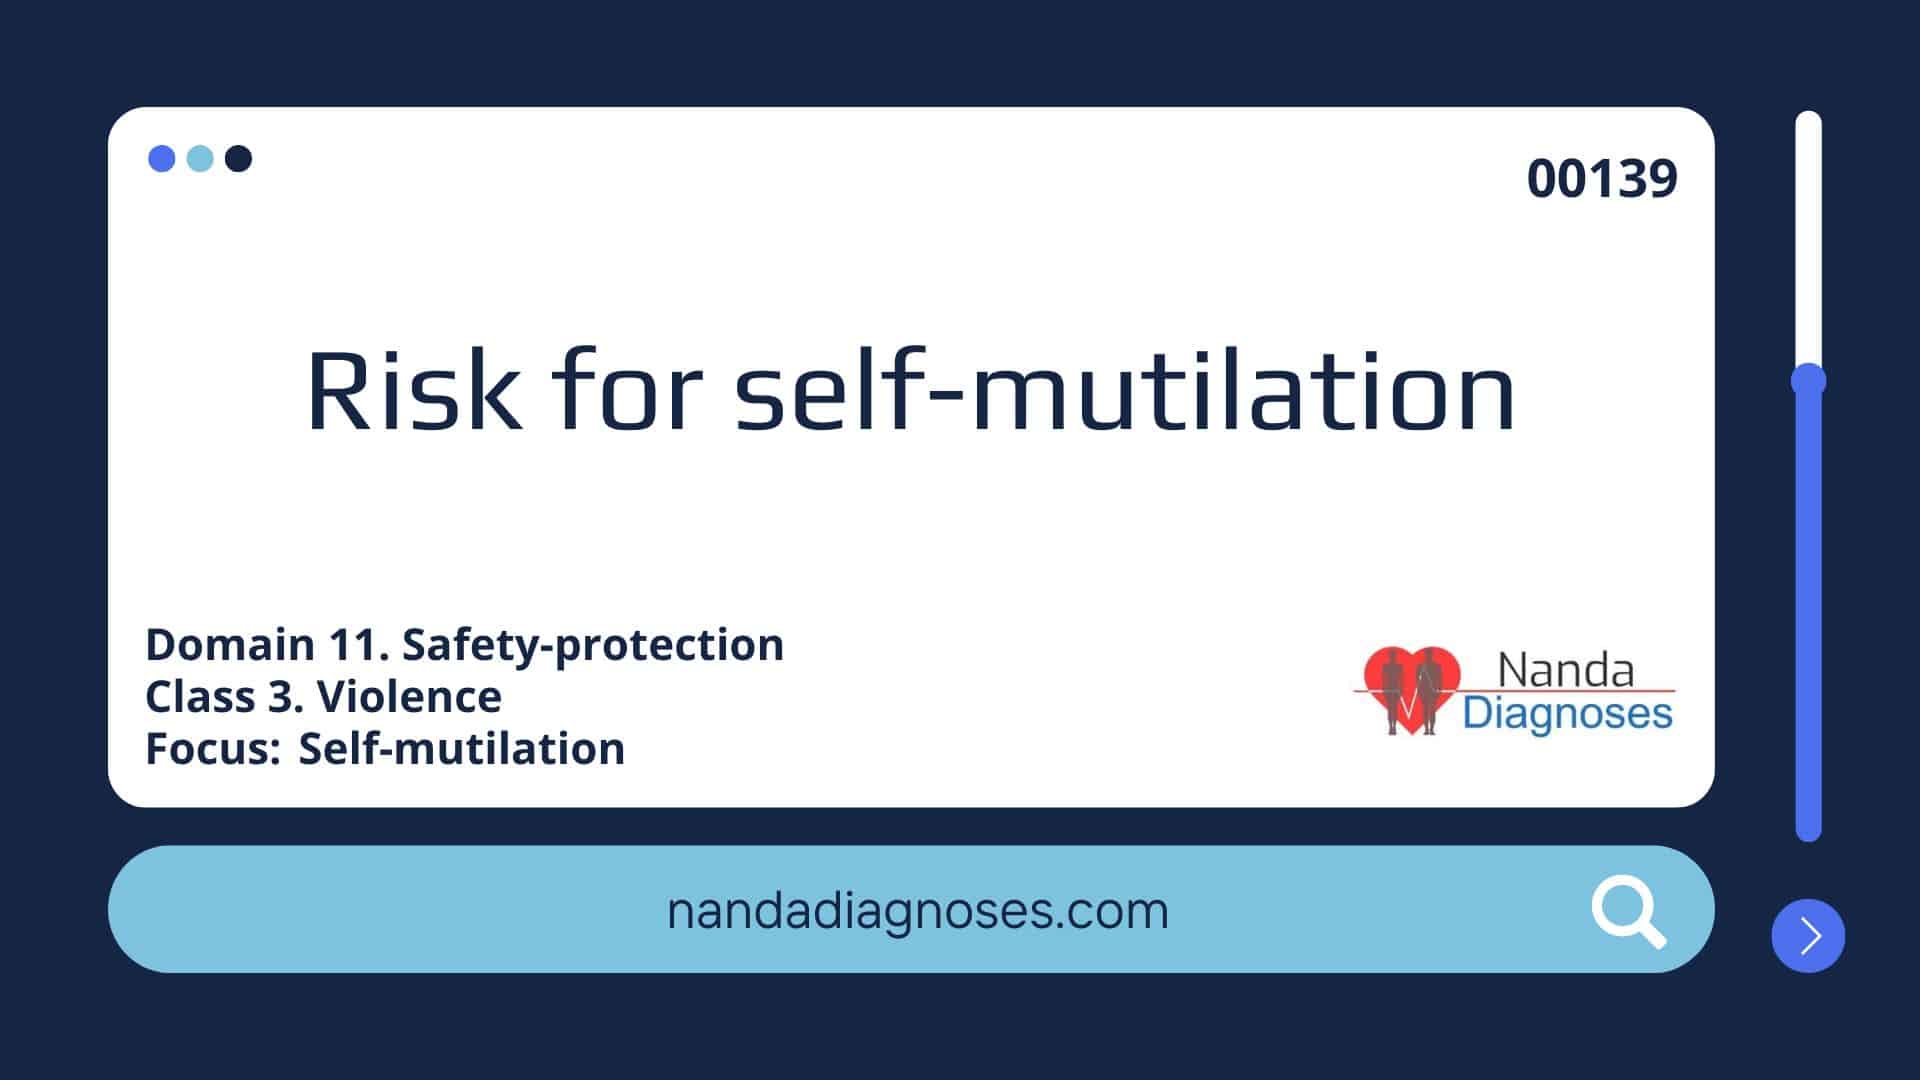 Nursing diagnosis Risk for self mutilation